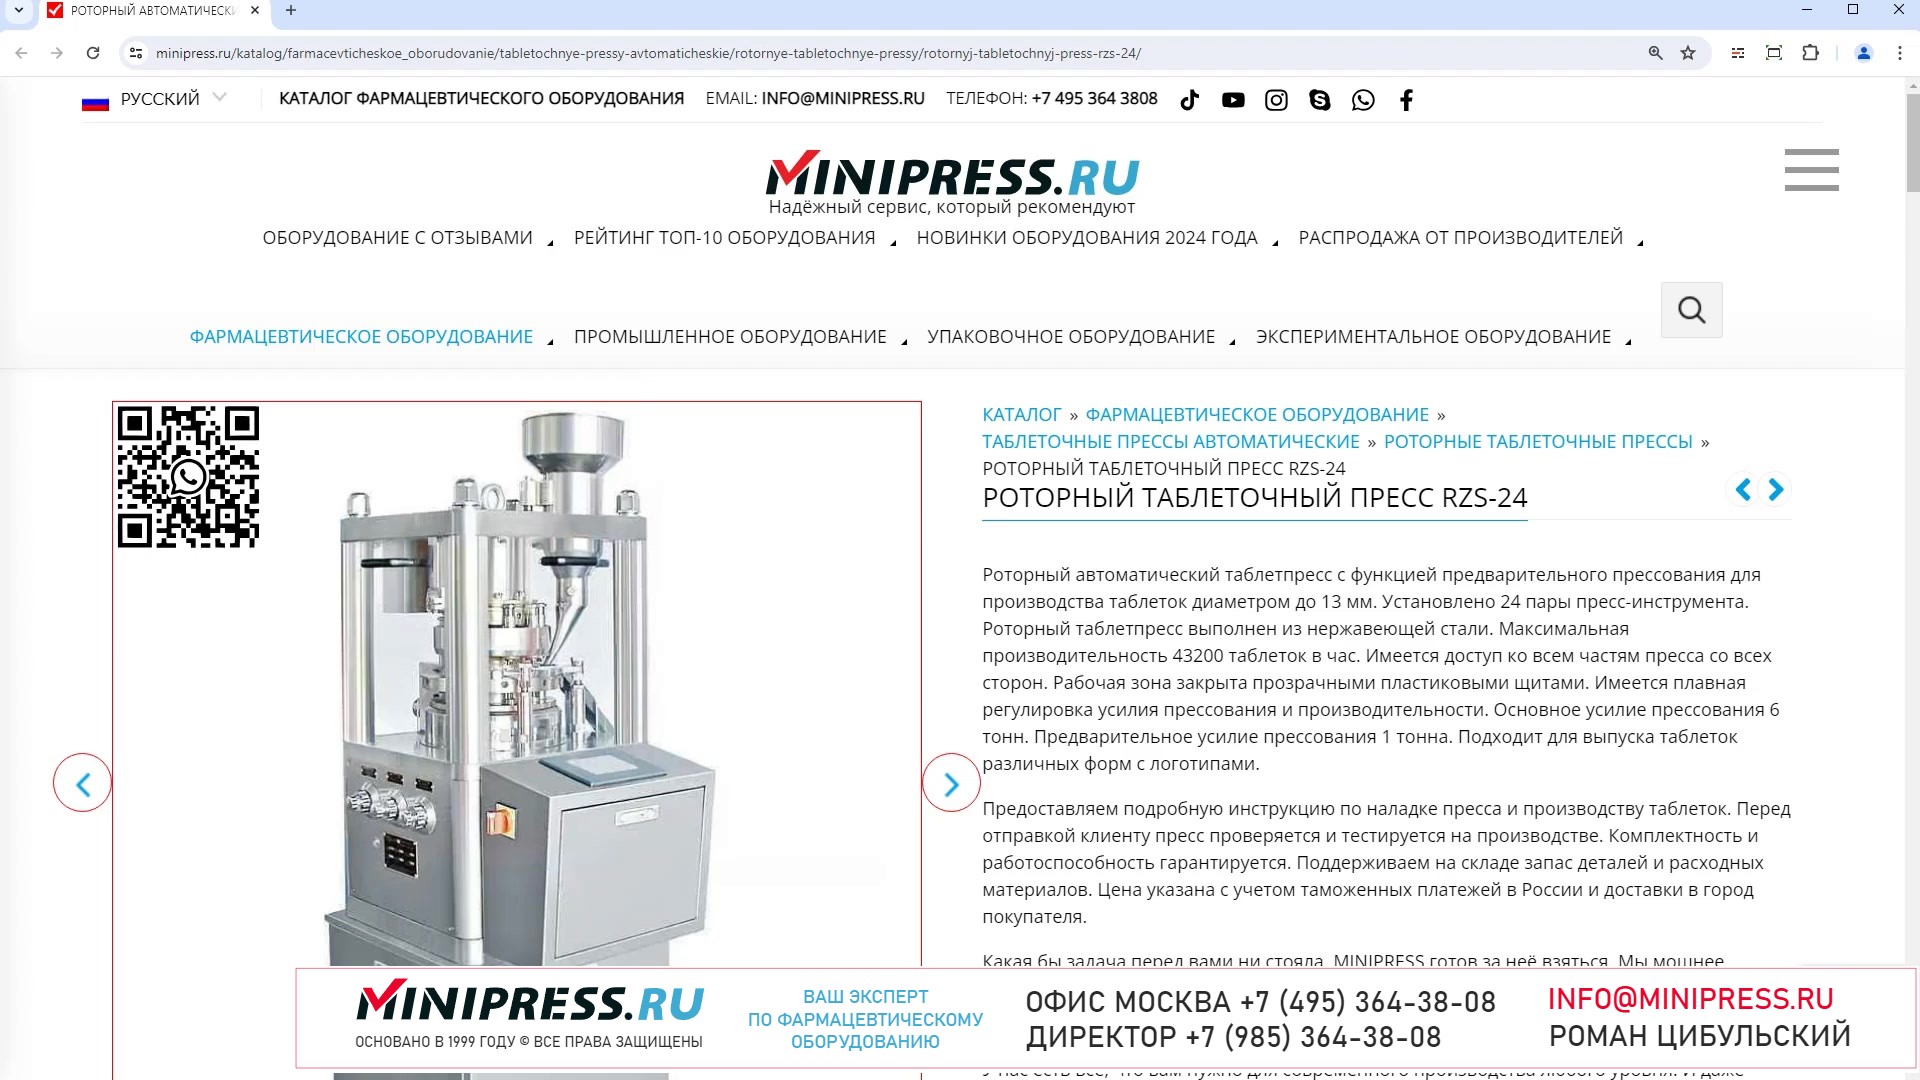 Minipress.ru Роторный таблеточный пресс RZS-24